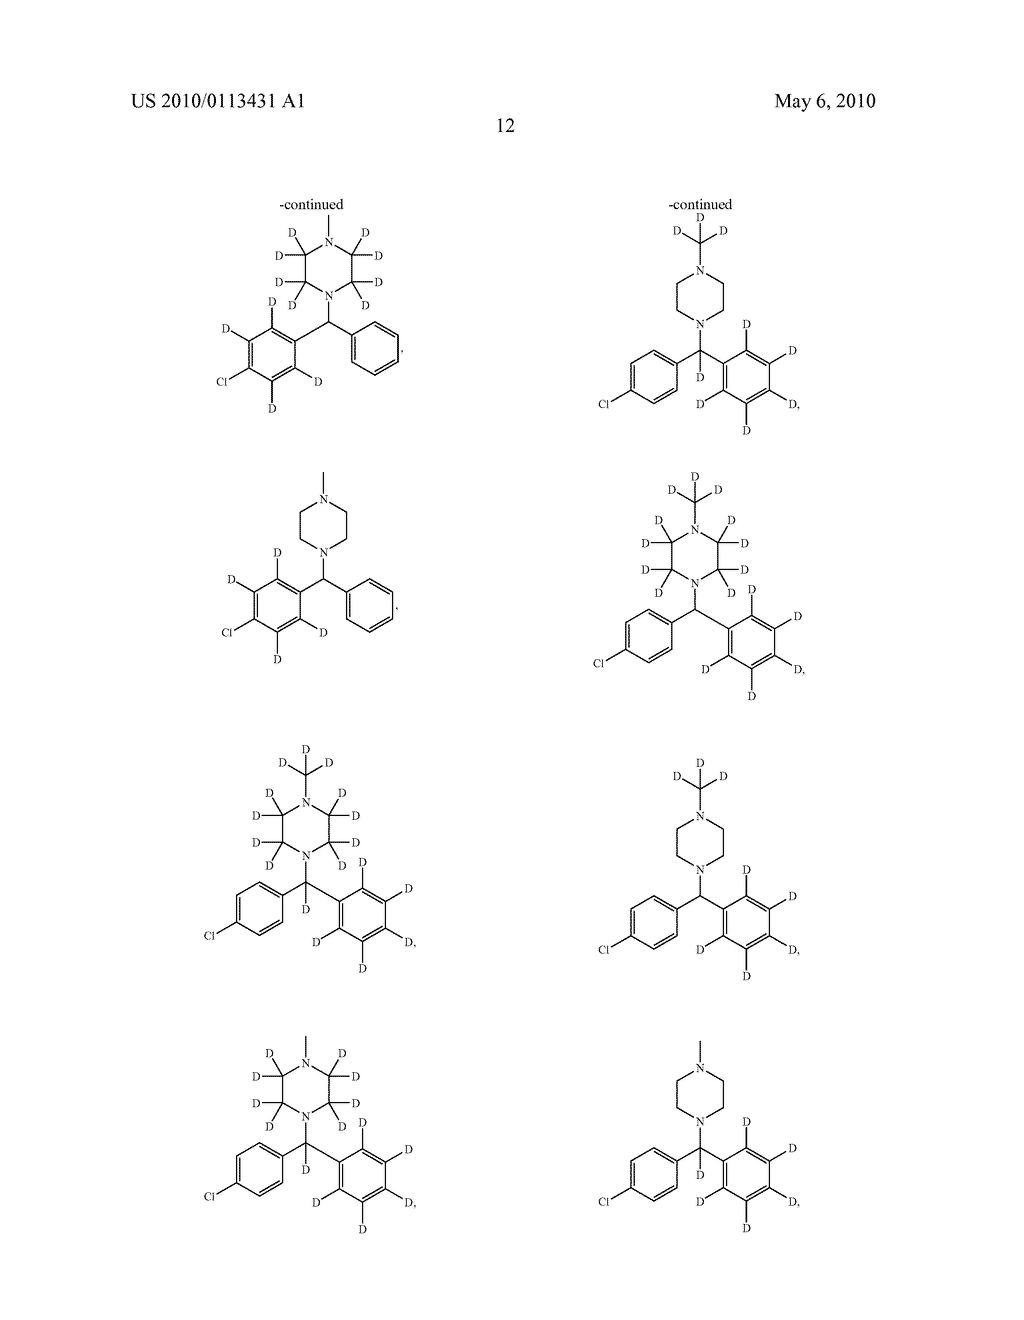 N-METHYL PIPERAZINE MODULATORS OF H1 RECEPTOR - diagram, schematic, and image 13